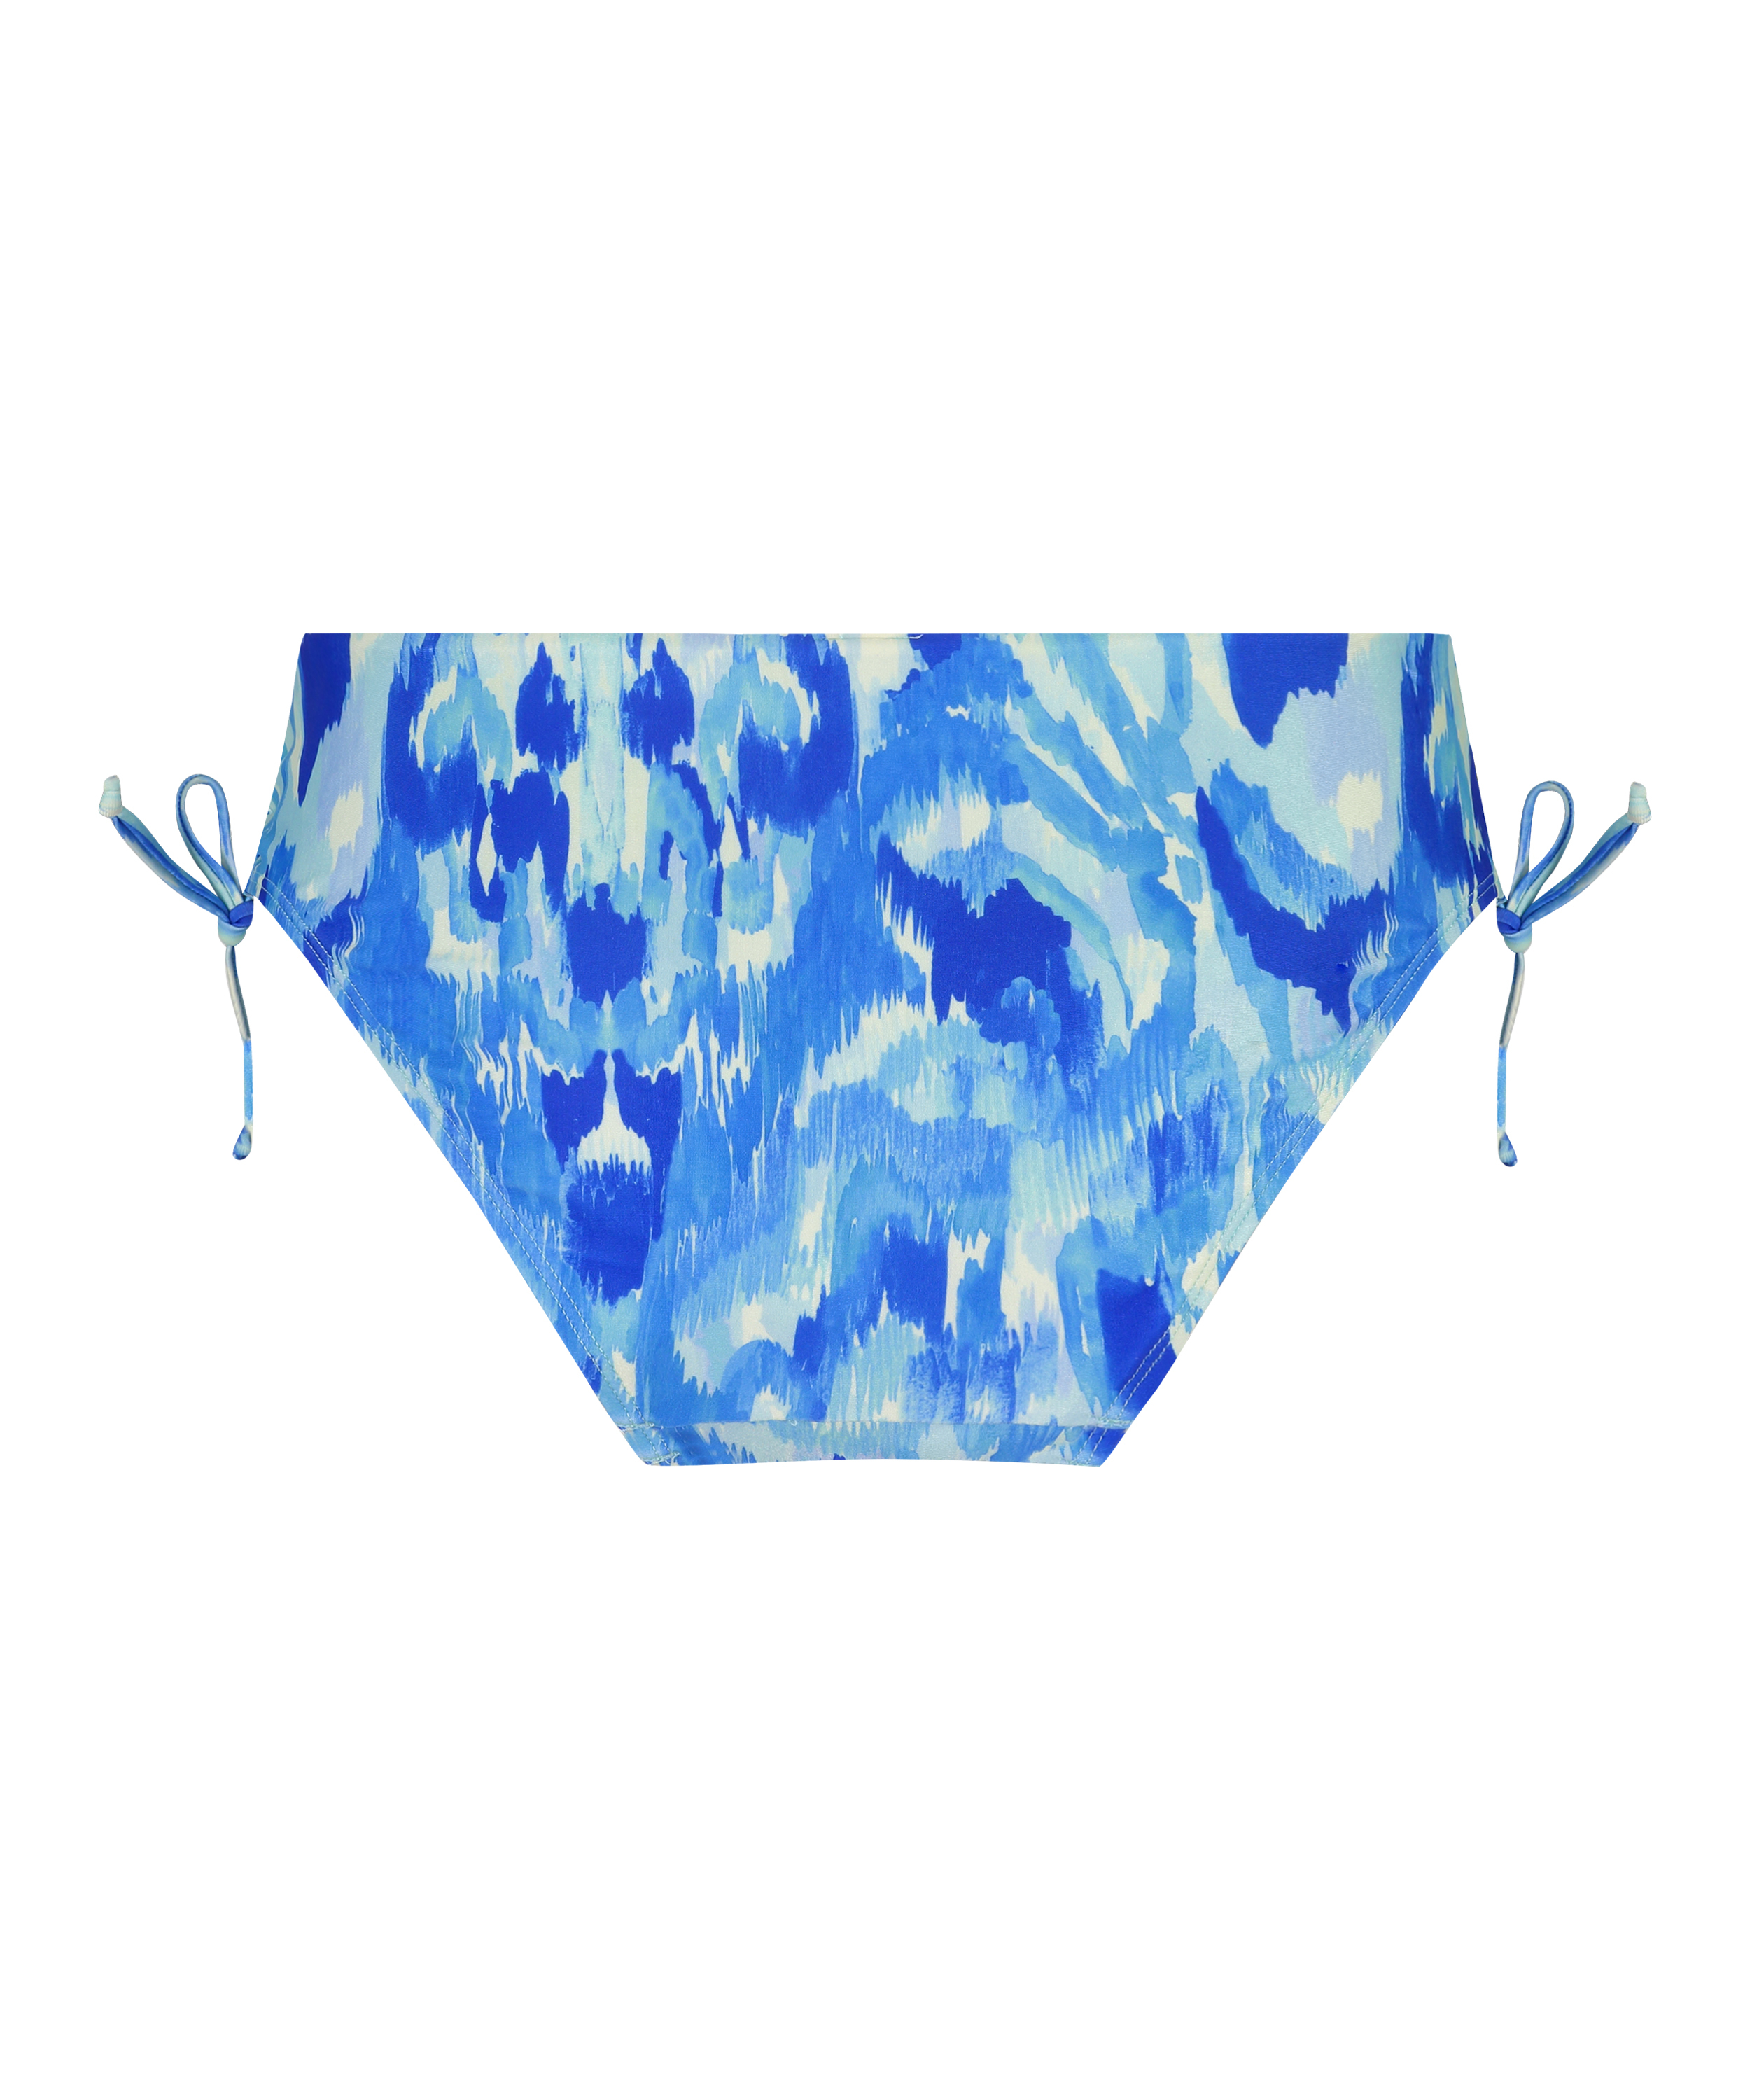 Paraguay Rio Bikini Bottoms, Blue, main